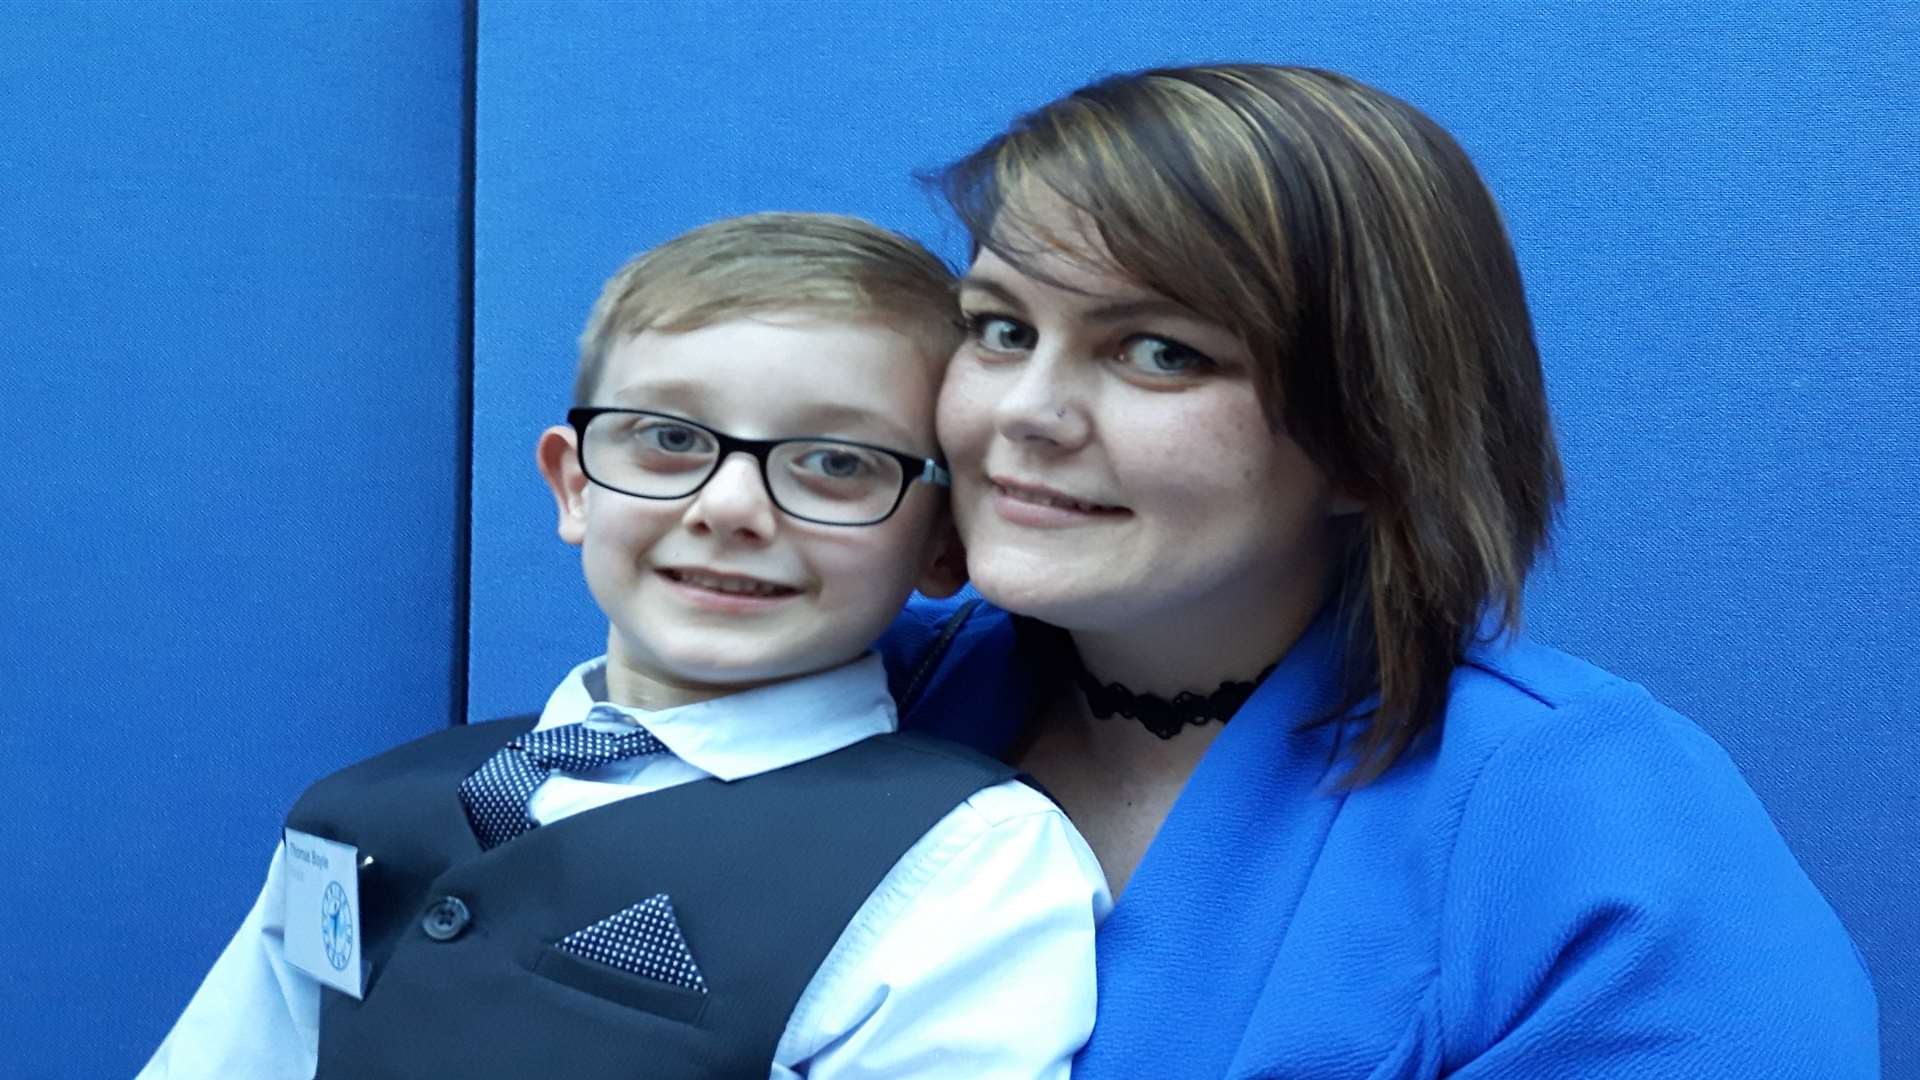 Thomas Boyle saved his mum when she had an asthma attack